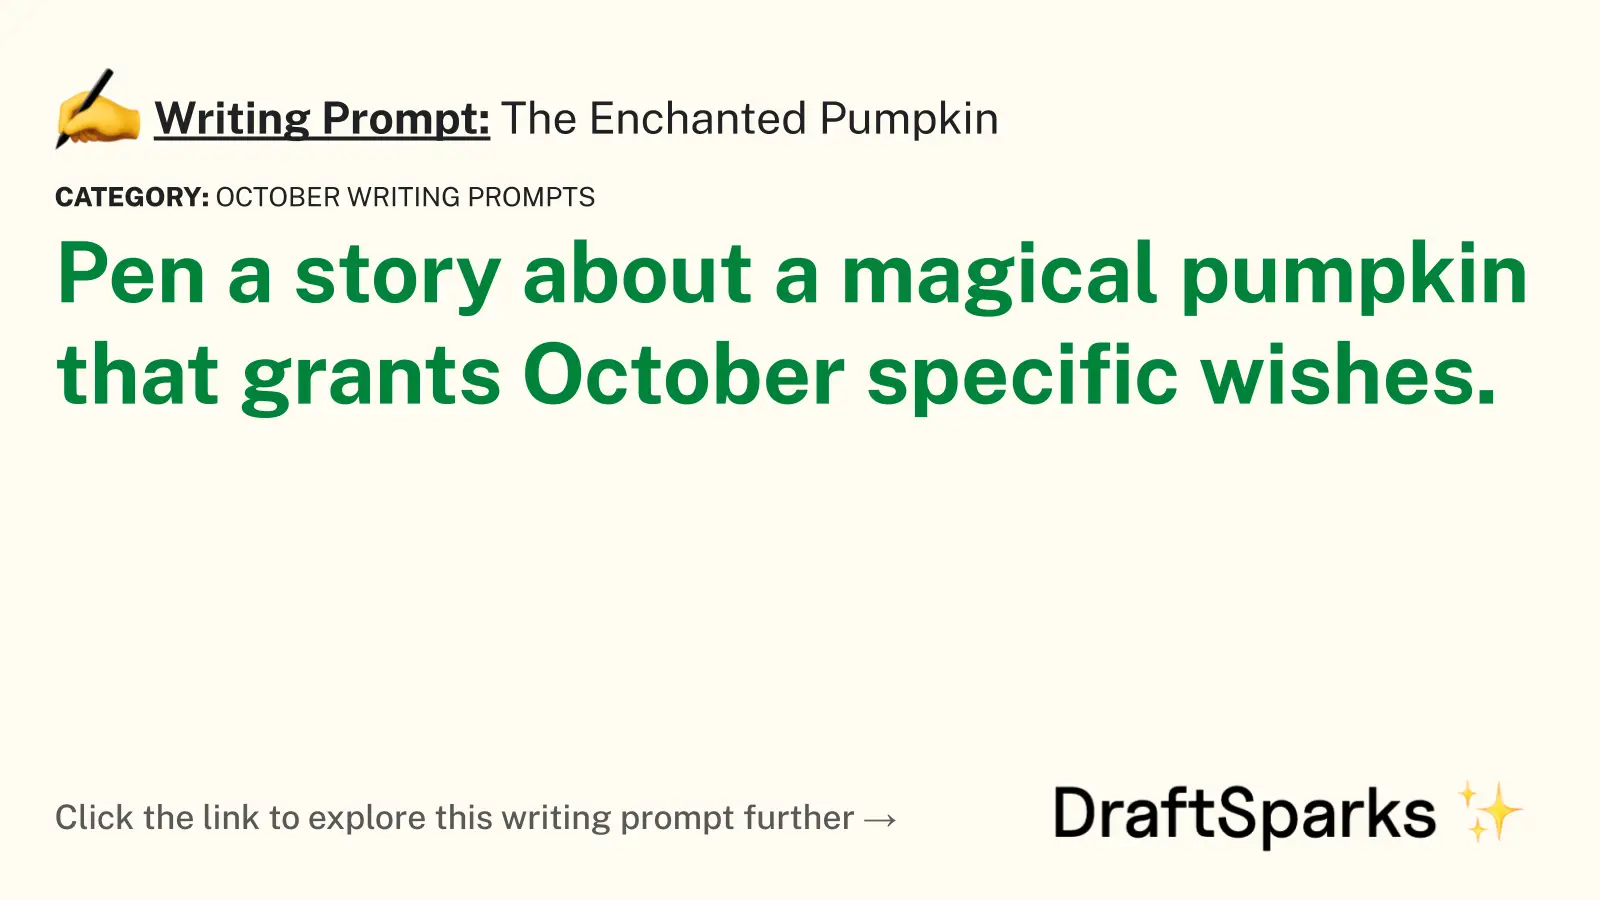 The Enchanted Pumpkin